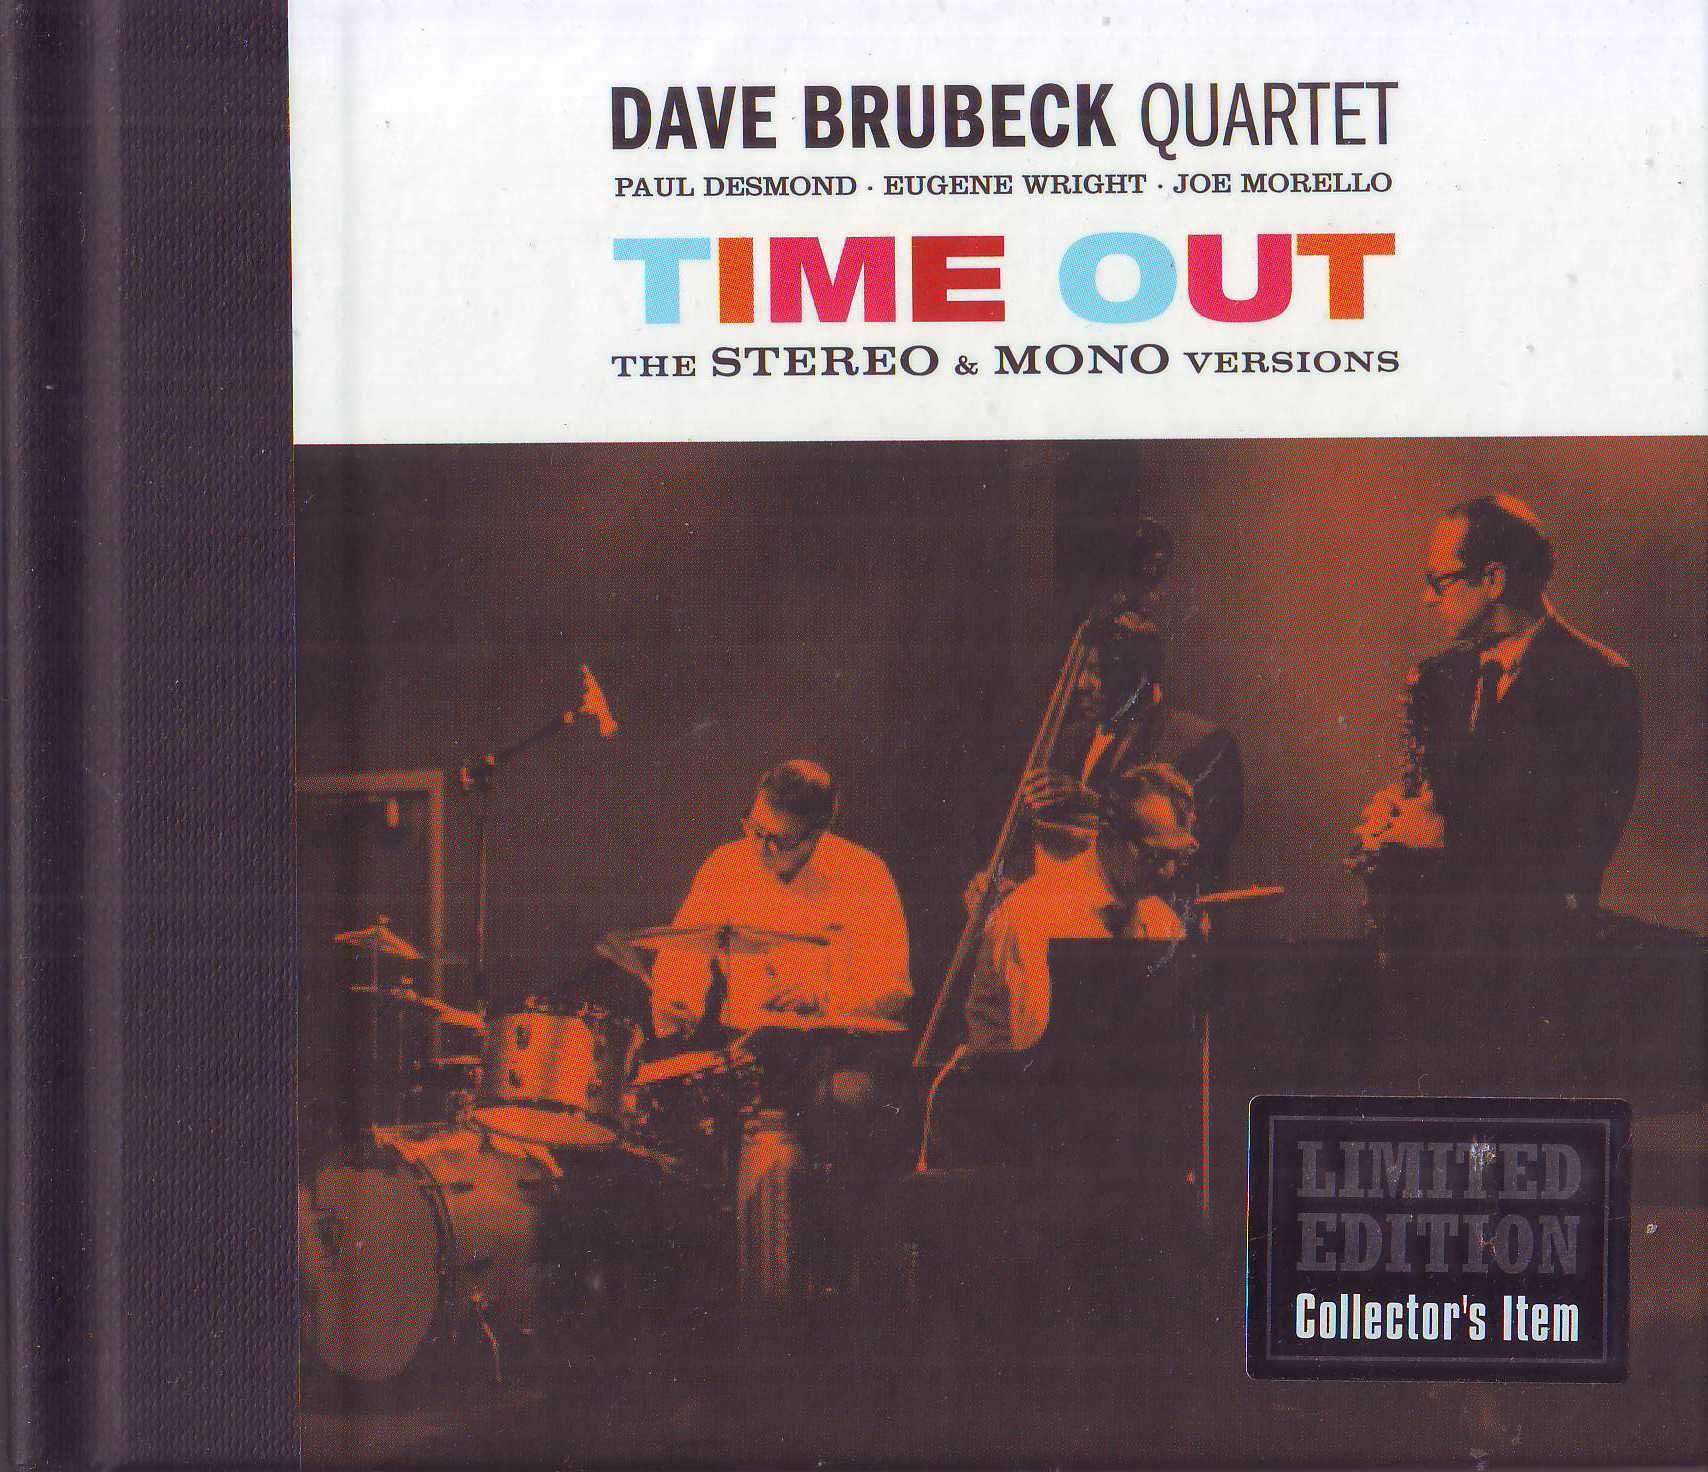 Dave Brubeck Quartet - Time Out [2CD] Stereo + Mono